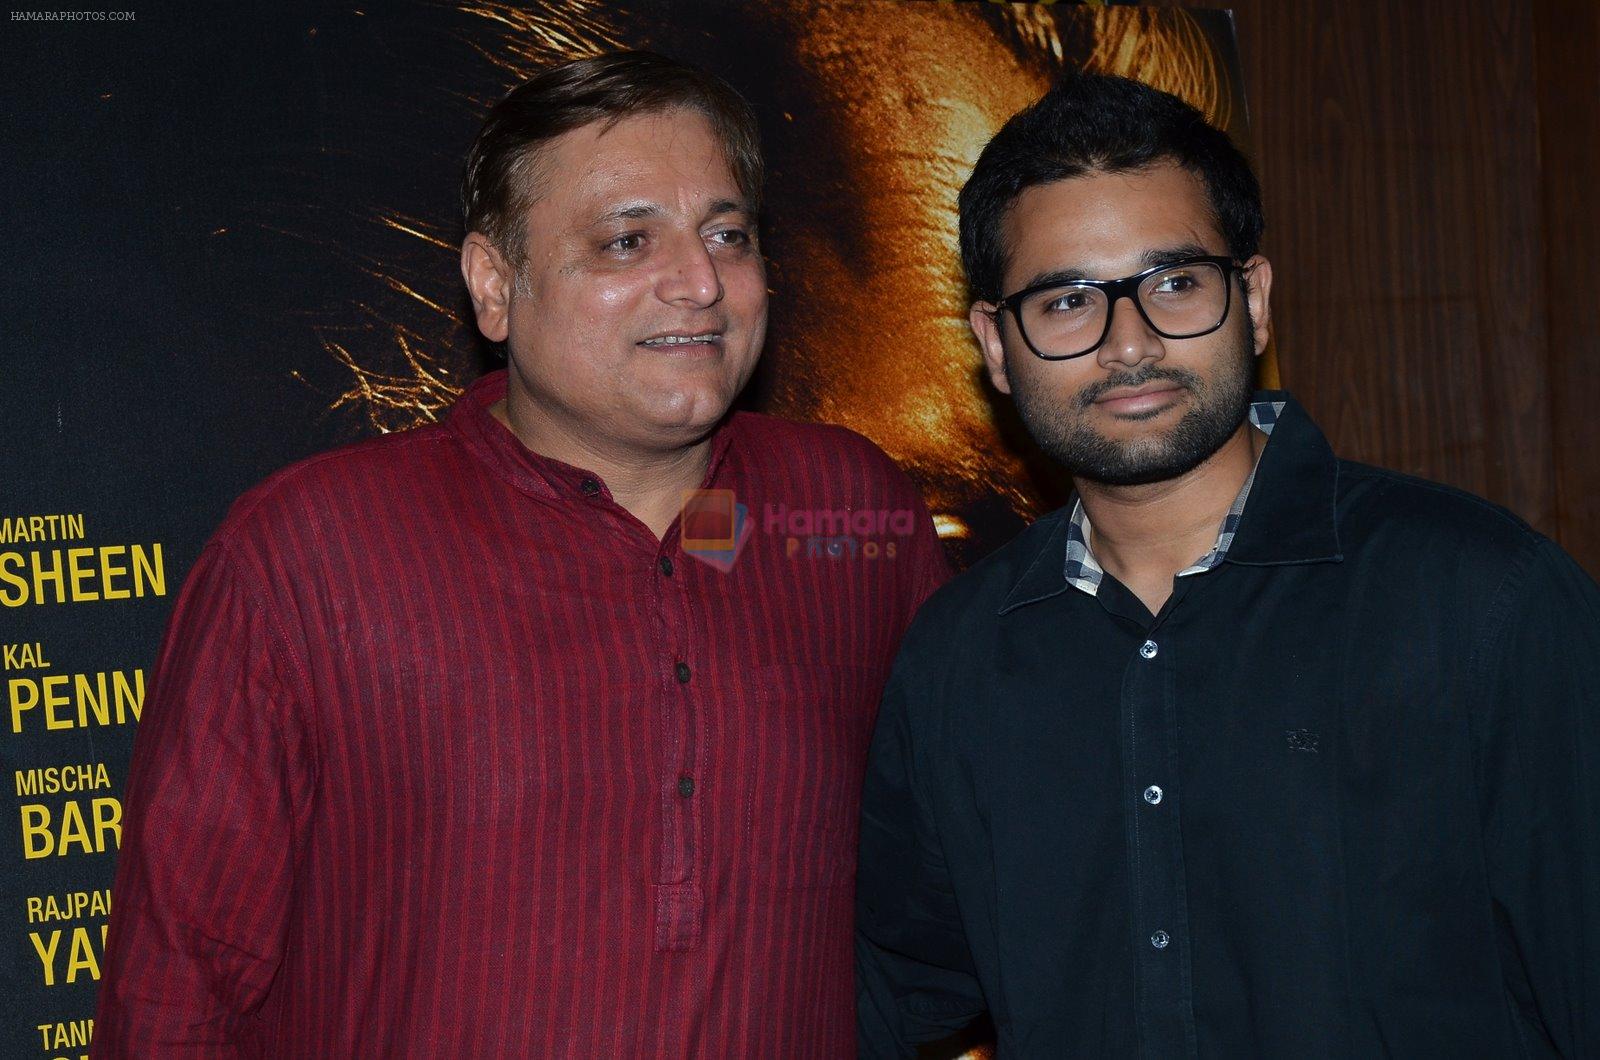 Manoj Joshi at Bhopal film premiere in Mumbai on 4th Dec 2014